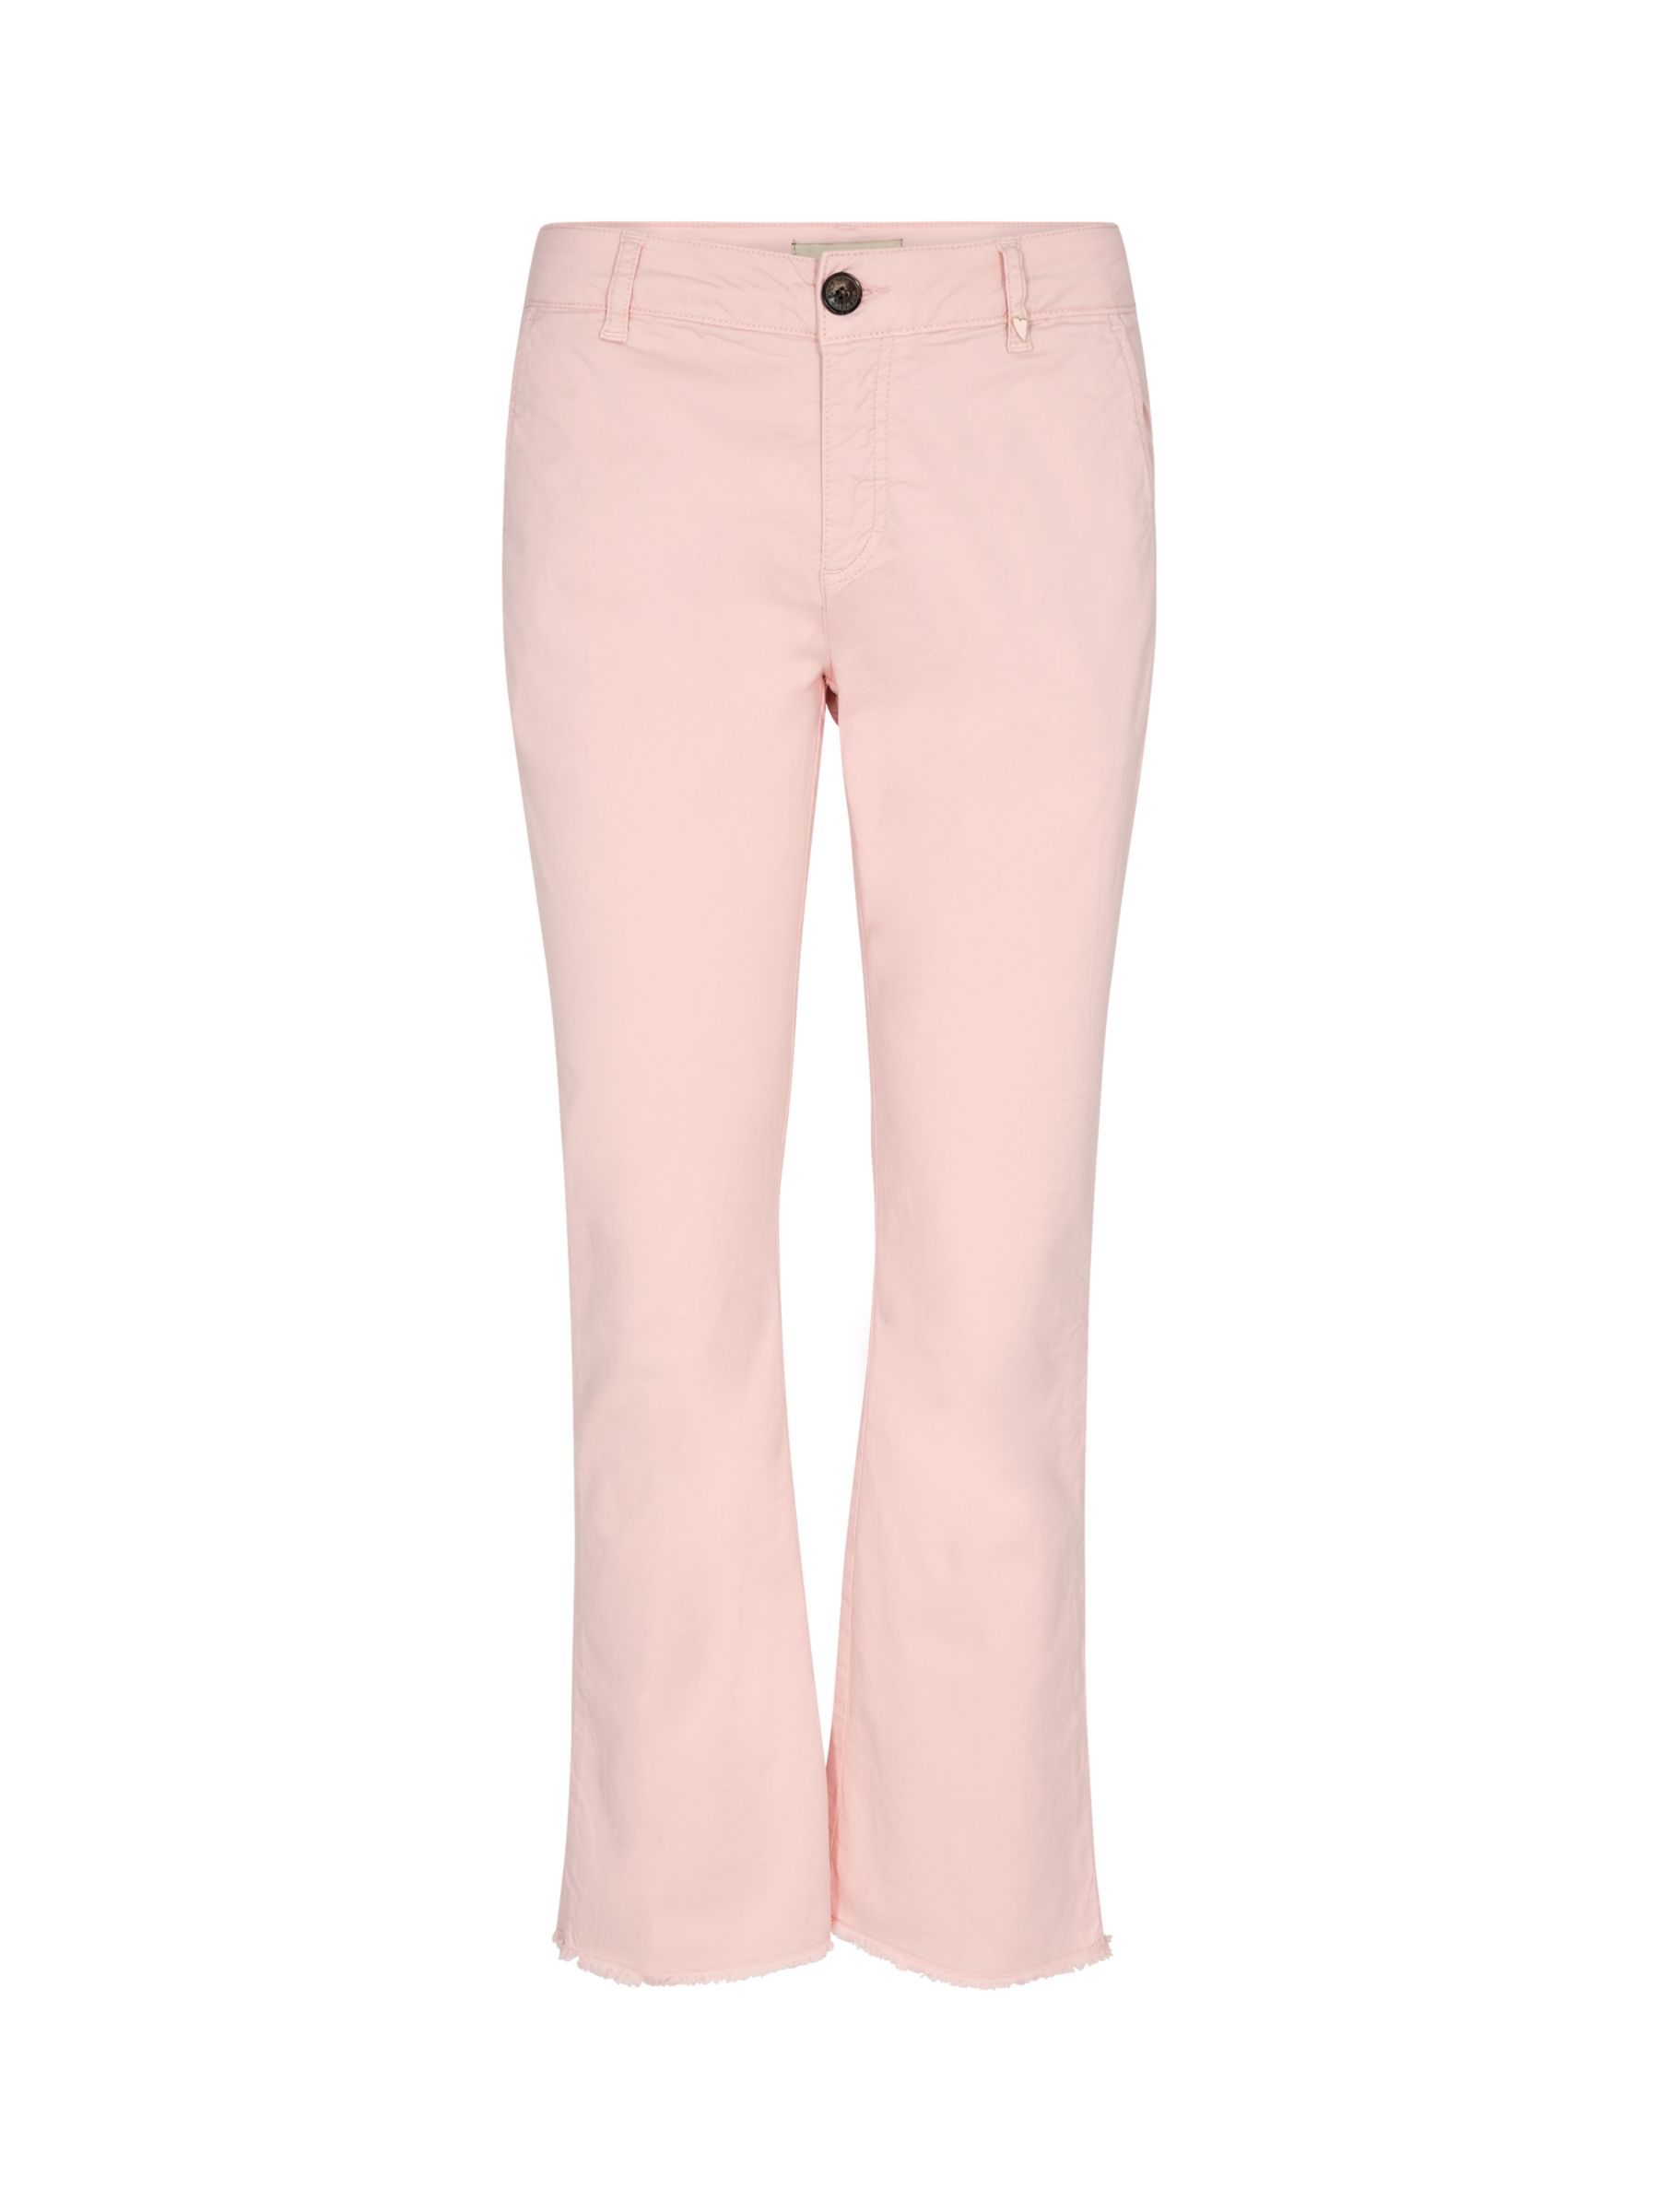 MOS MOSH Clarissa Chino Trousers, Pink at John Lewis & Partners